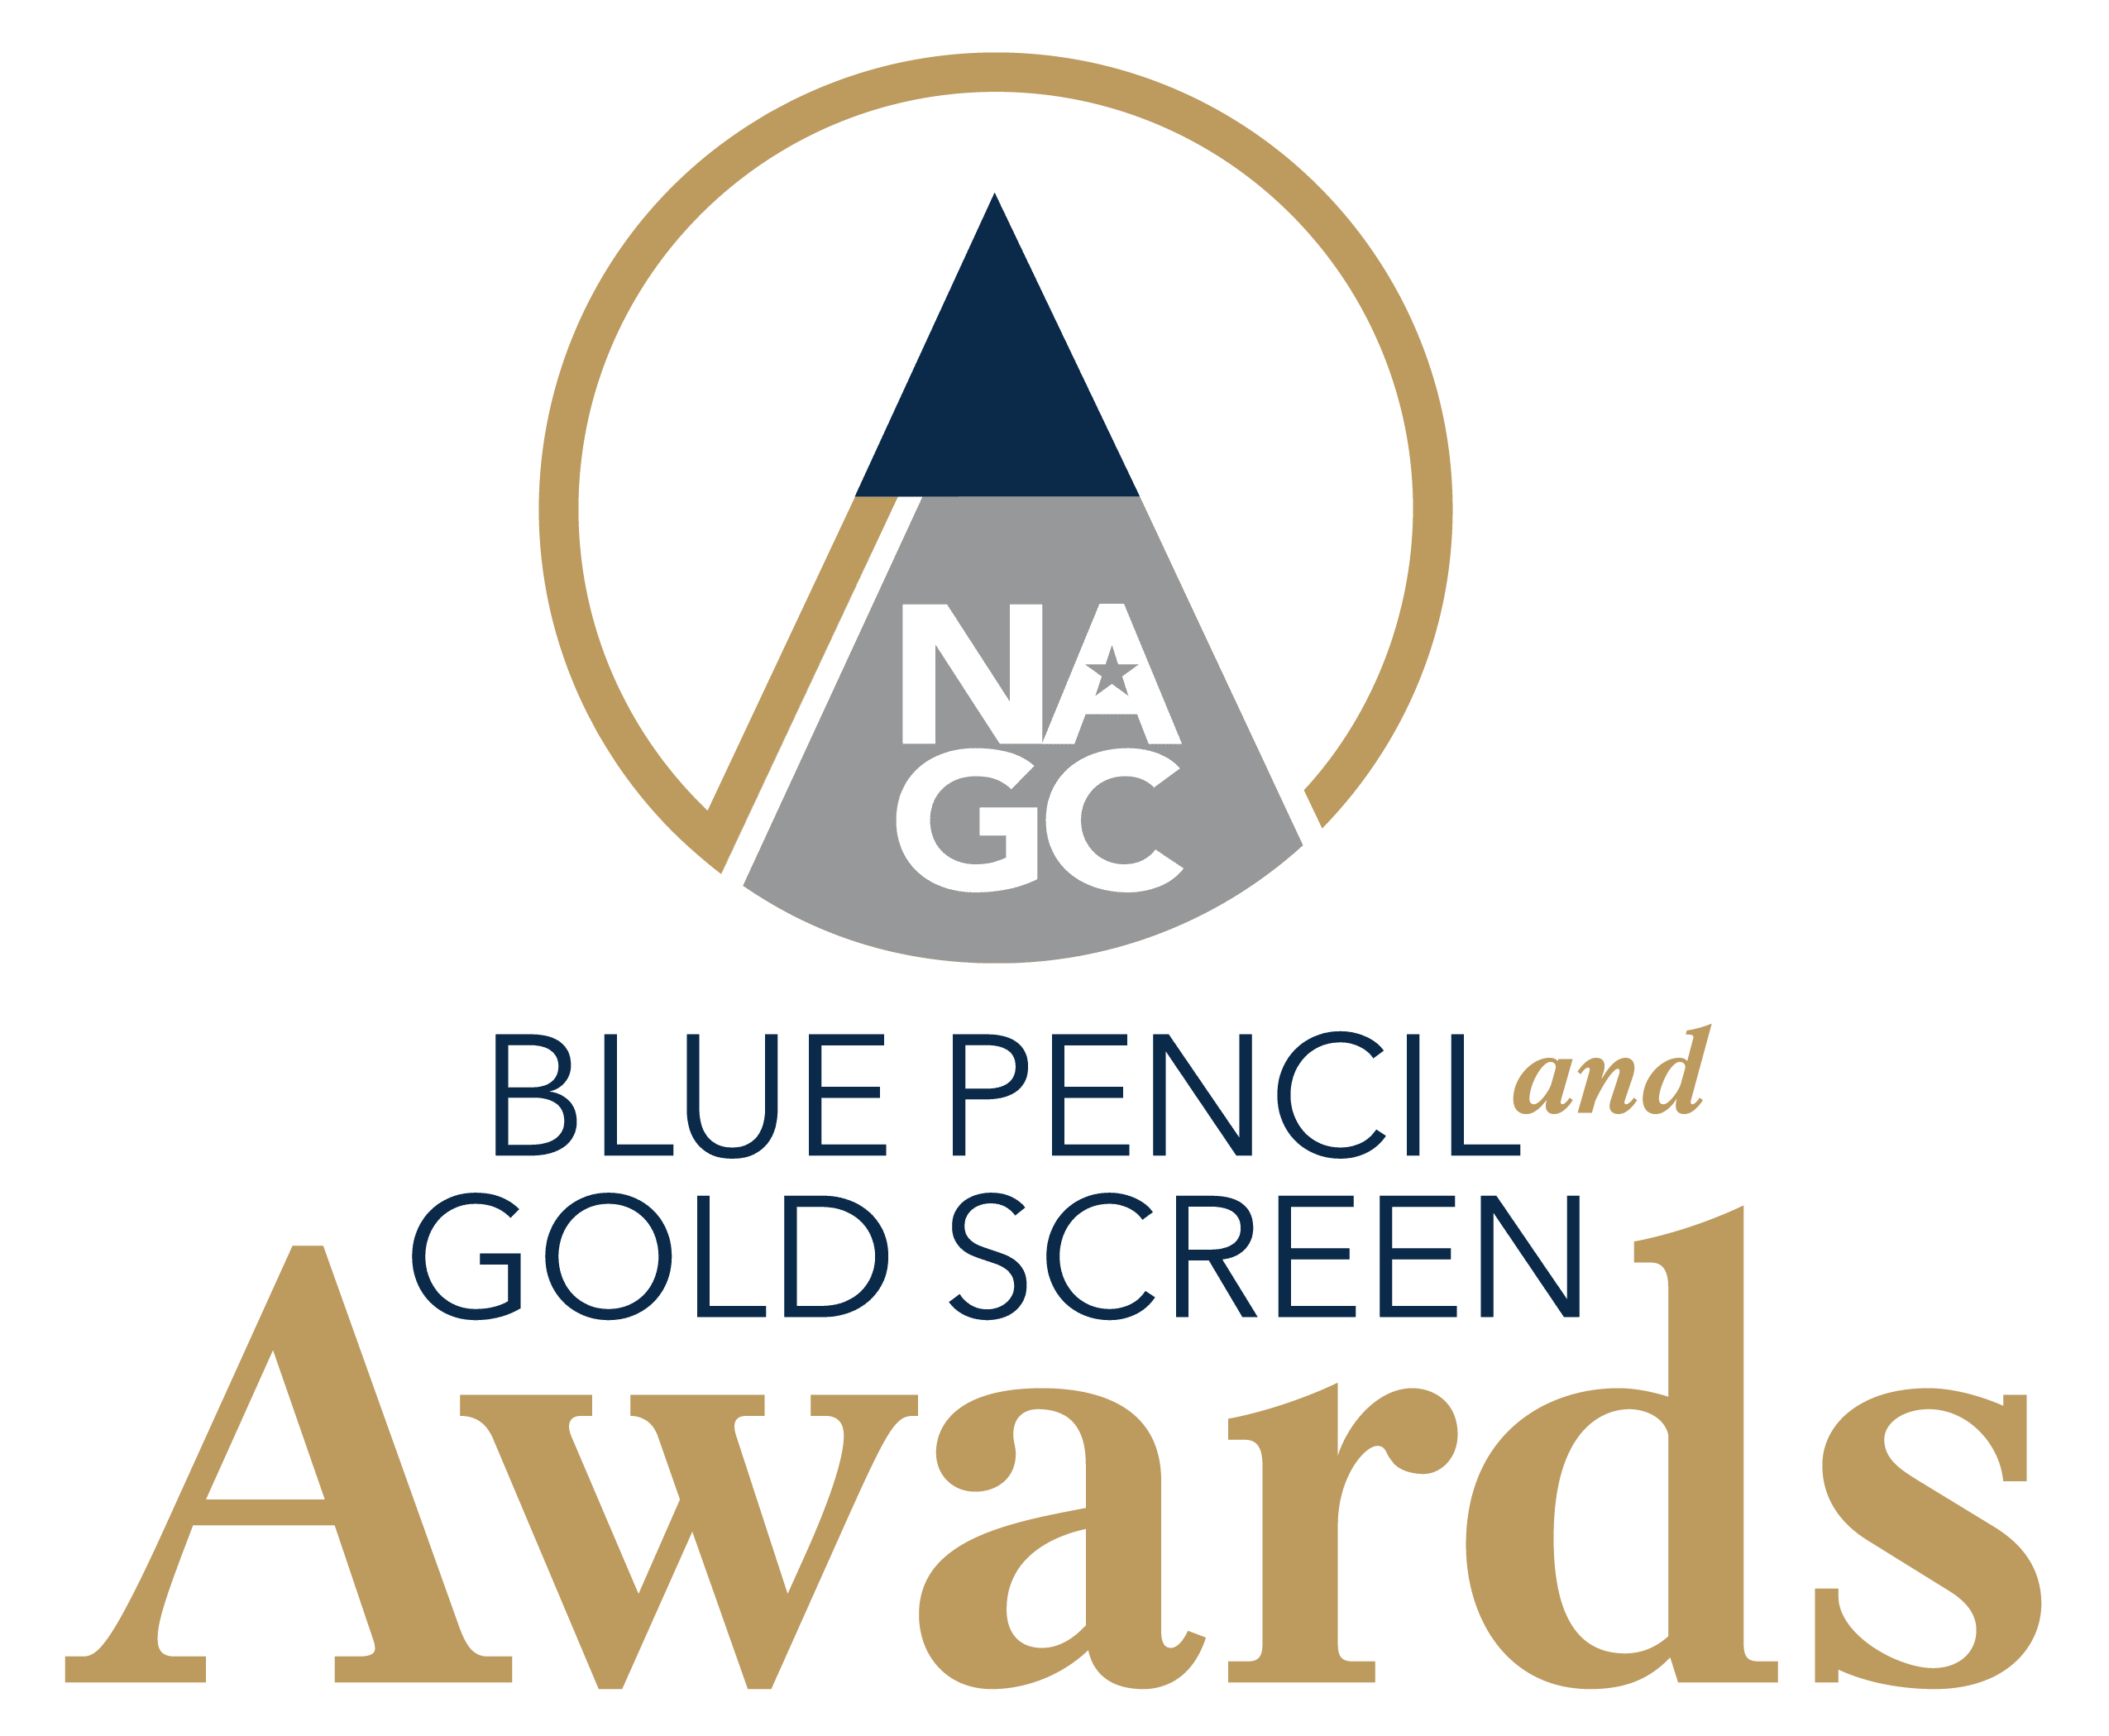 NAGC Blue Pencil Blue Gold Screen Awards Logo